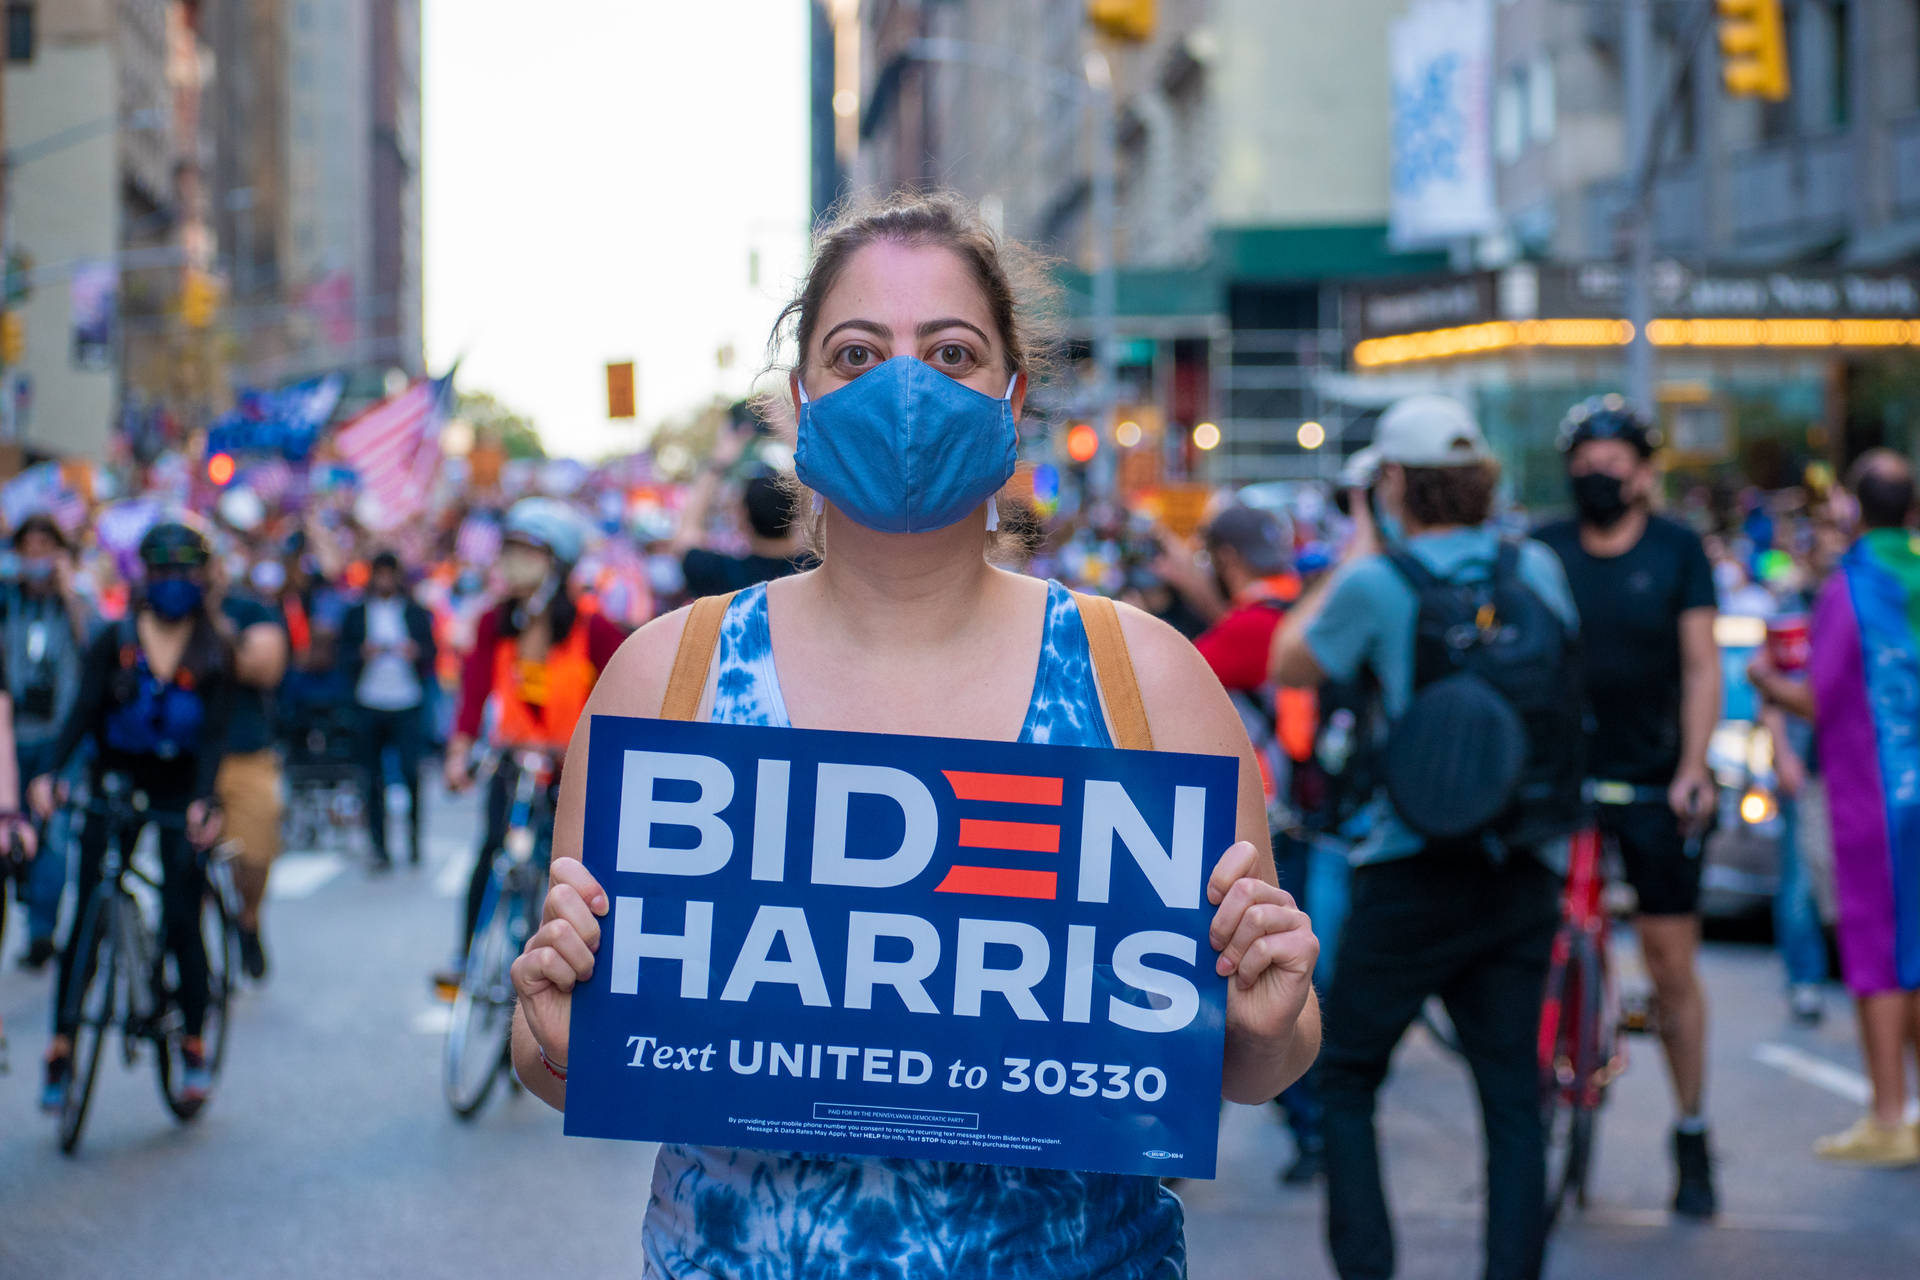 Joe Biden And Harris Supporter